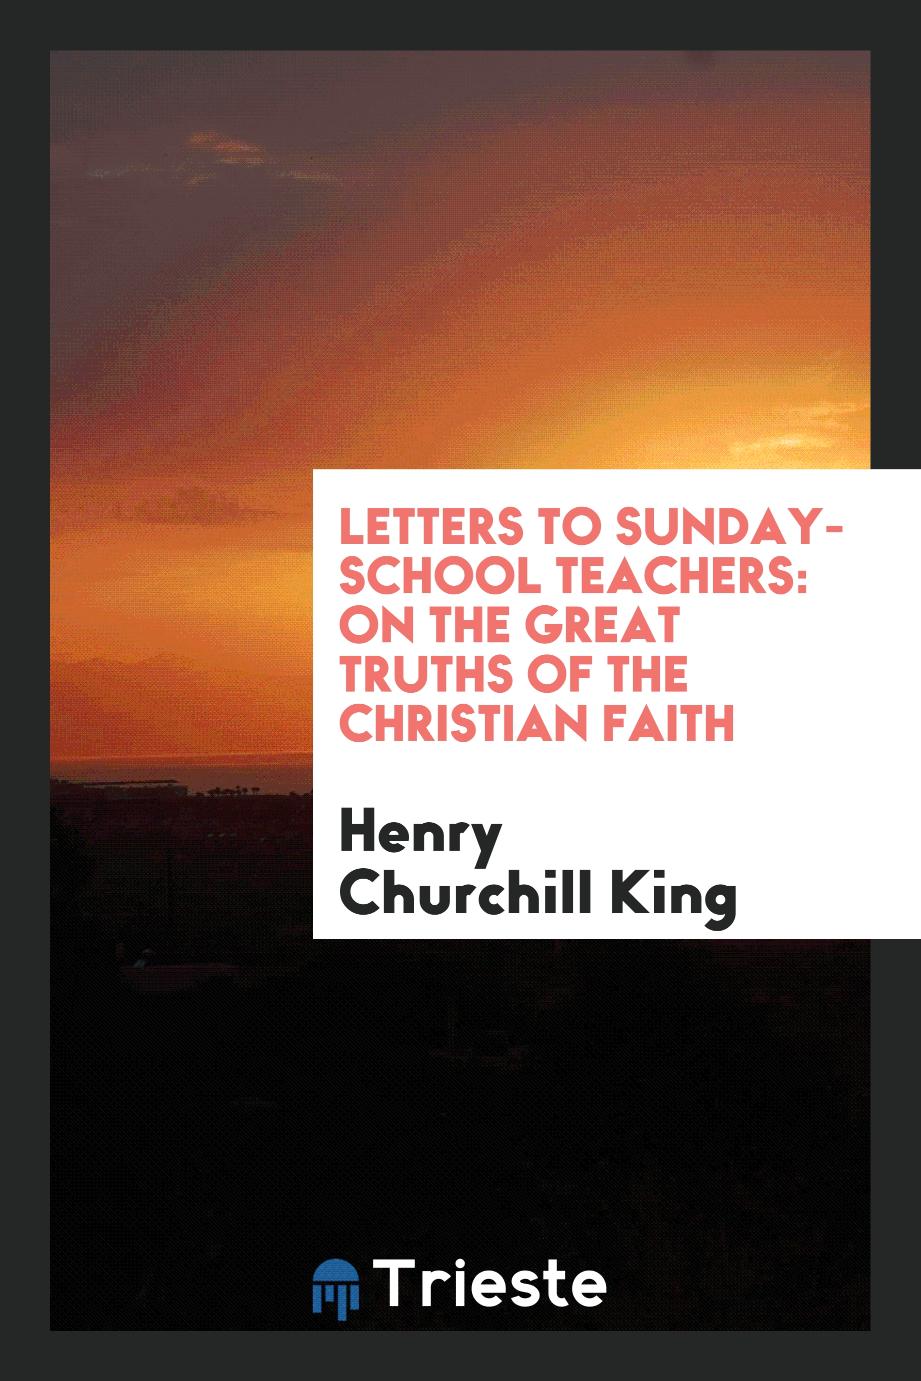 Letters to Sunday-school teachers: on the great truths of the Christian faith